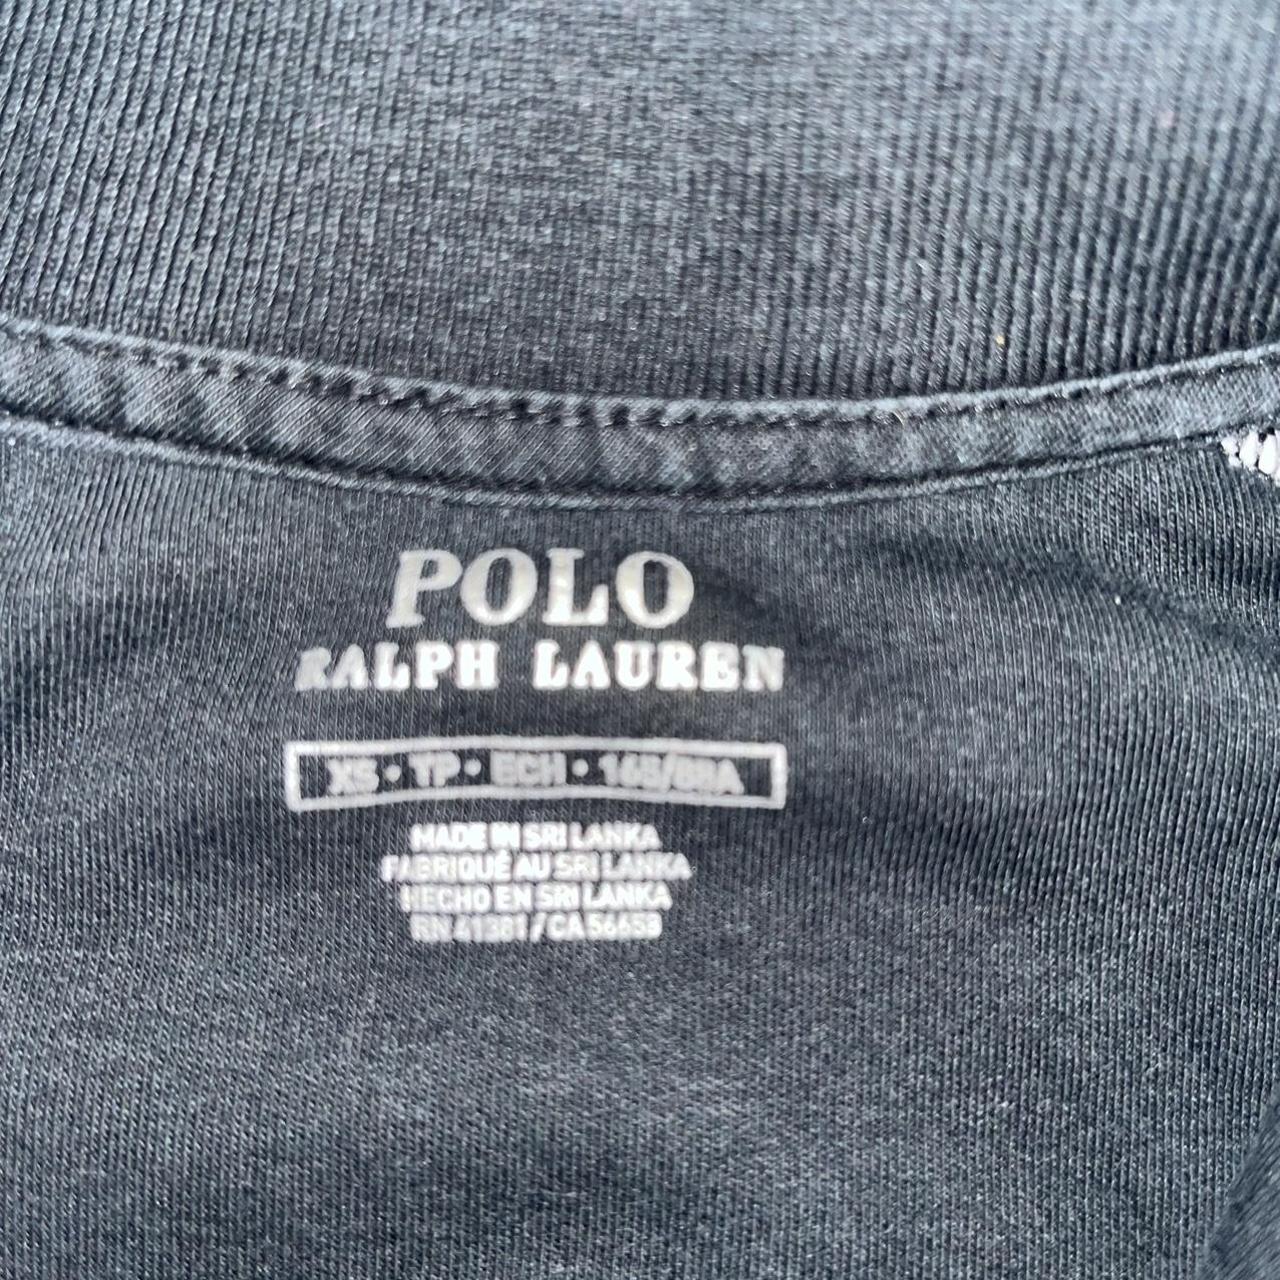 Polo Ralph Lauren Men's Black and White Jacket | Depop